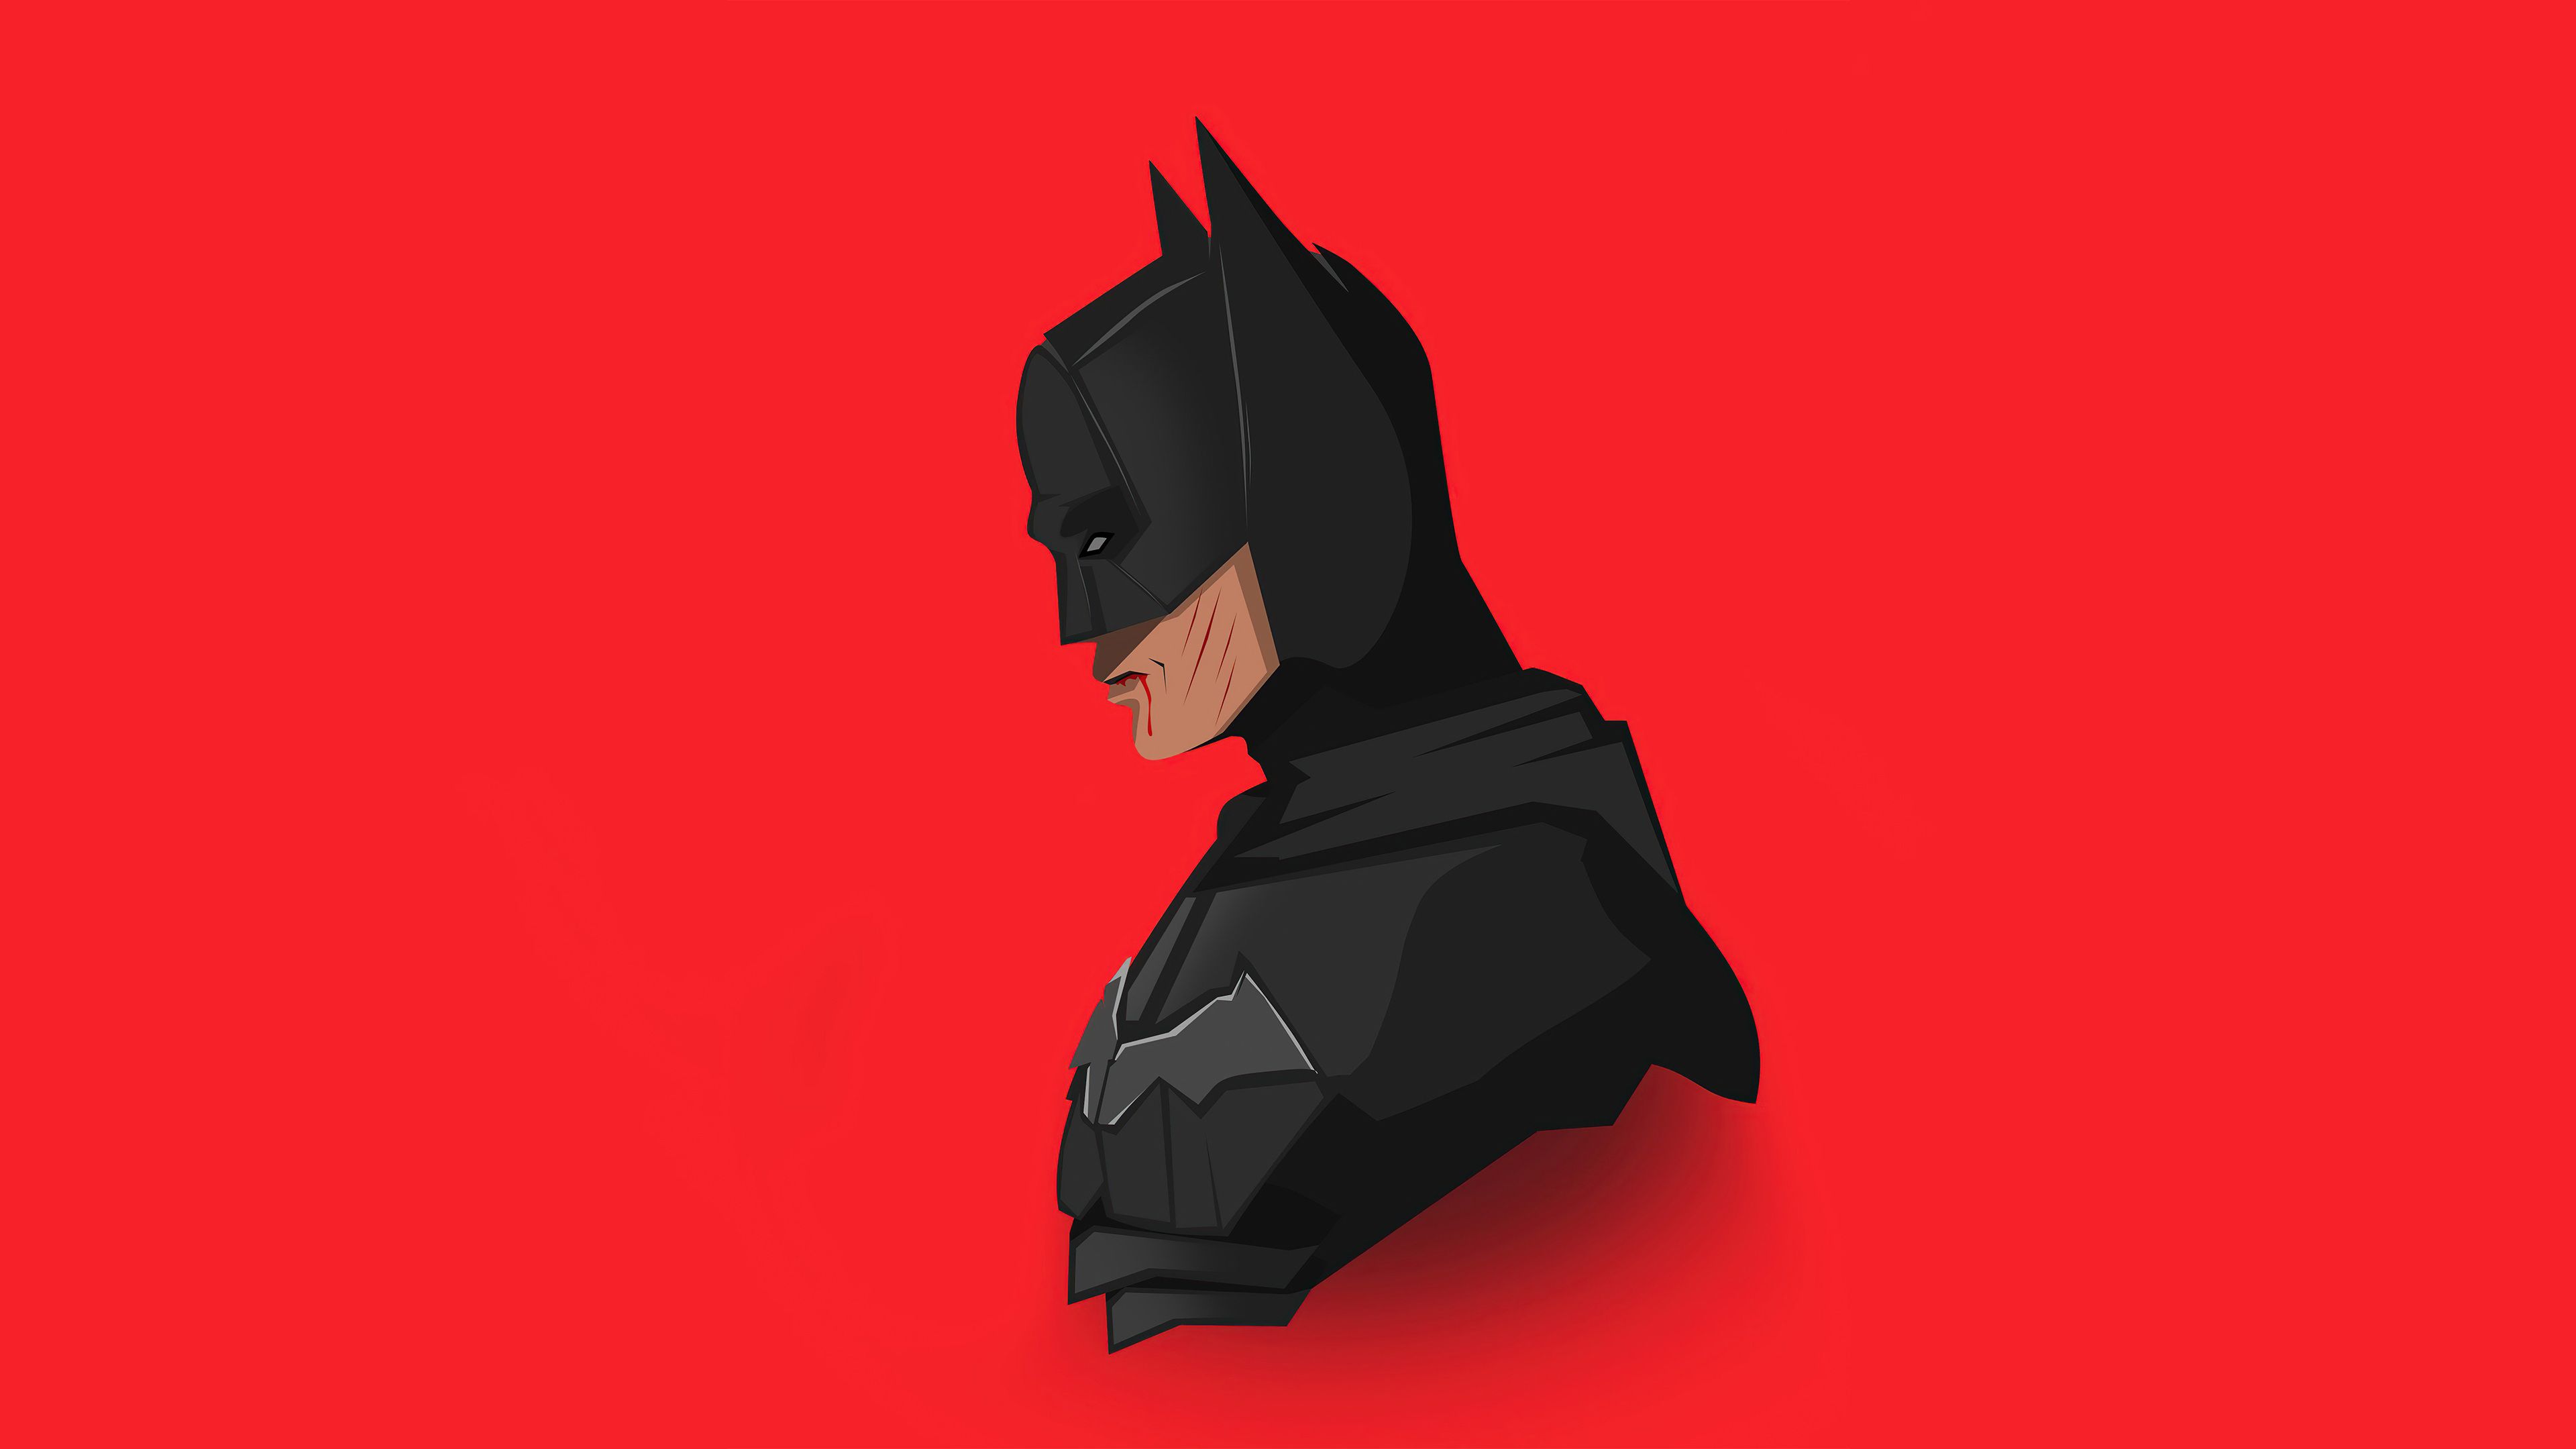 The-Batman-Movie-Comic-Wallpaper-Full-HD-Free-Download-for-Desktop-Laptop-PC--144  -  - Free HD Wallpapers Download for Desktop Computer